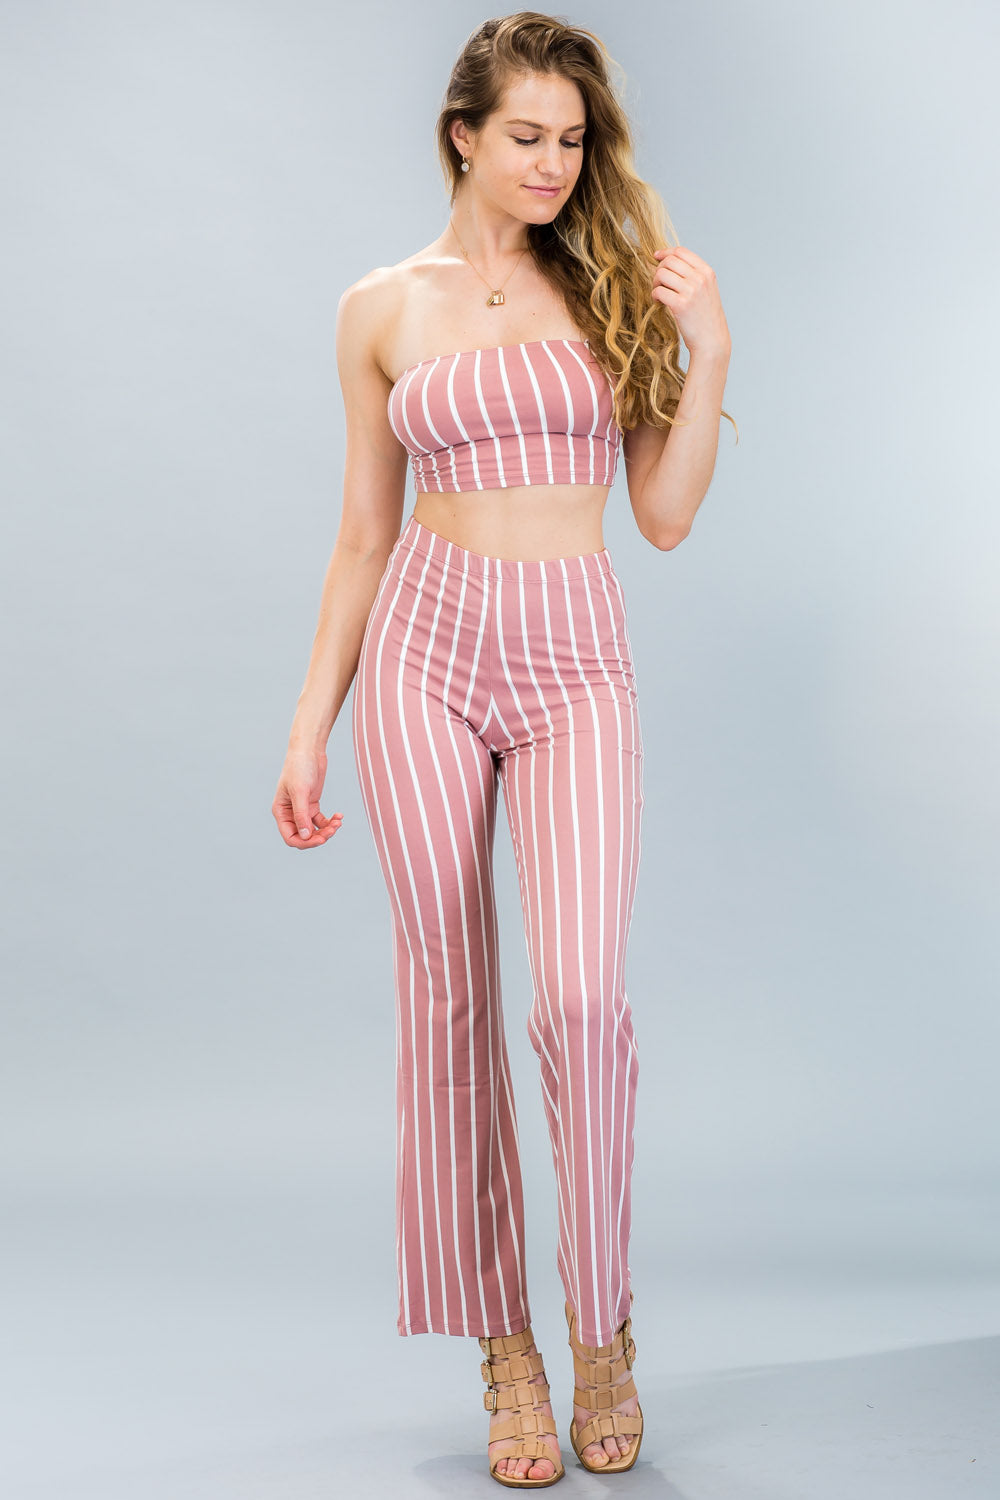 [$3/piece] Striped Crop Tube Top & Pants Set